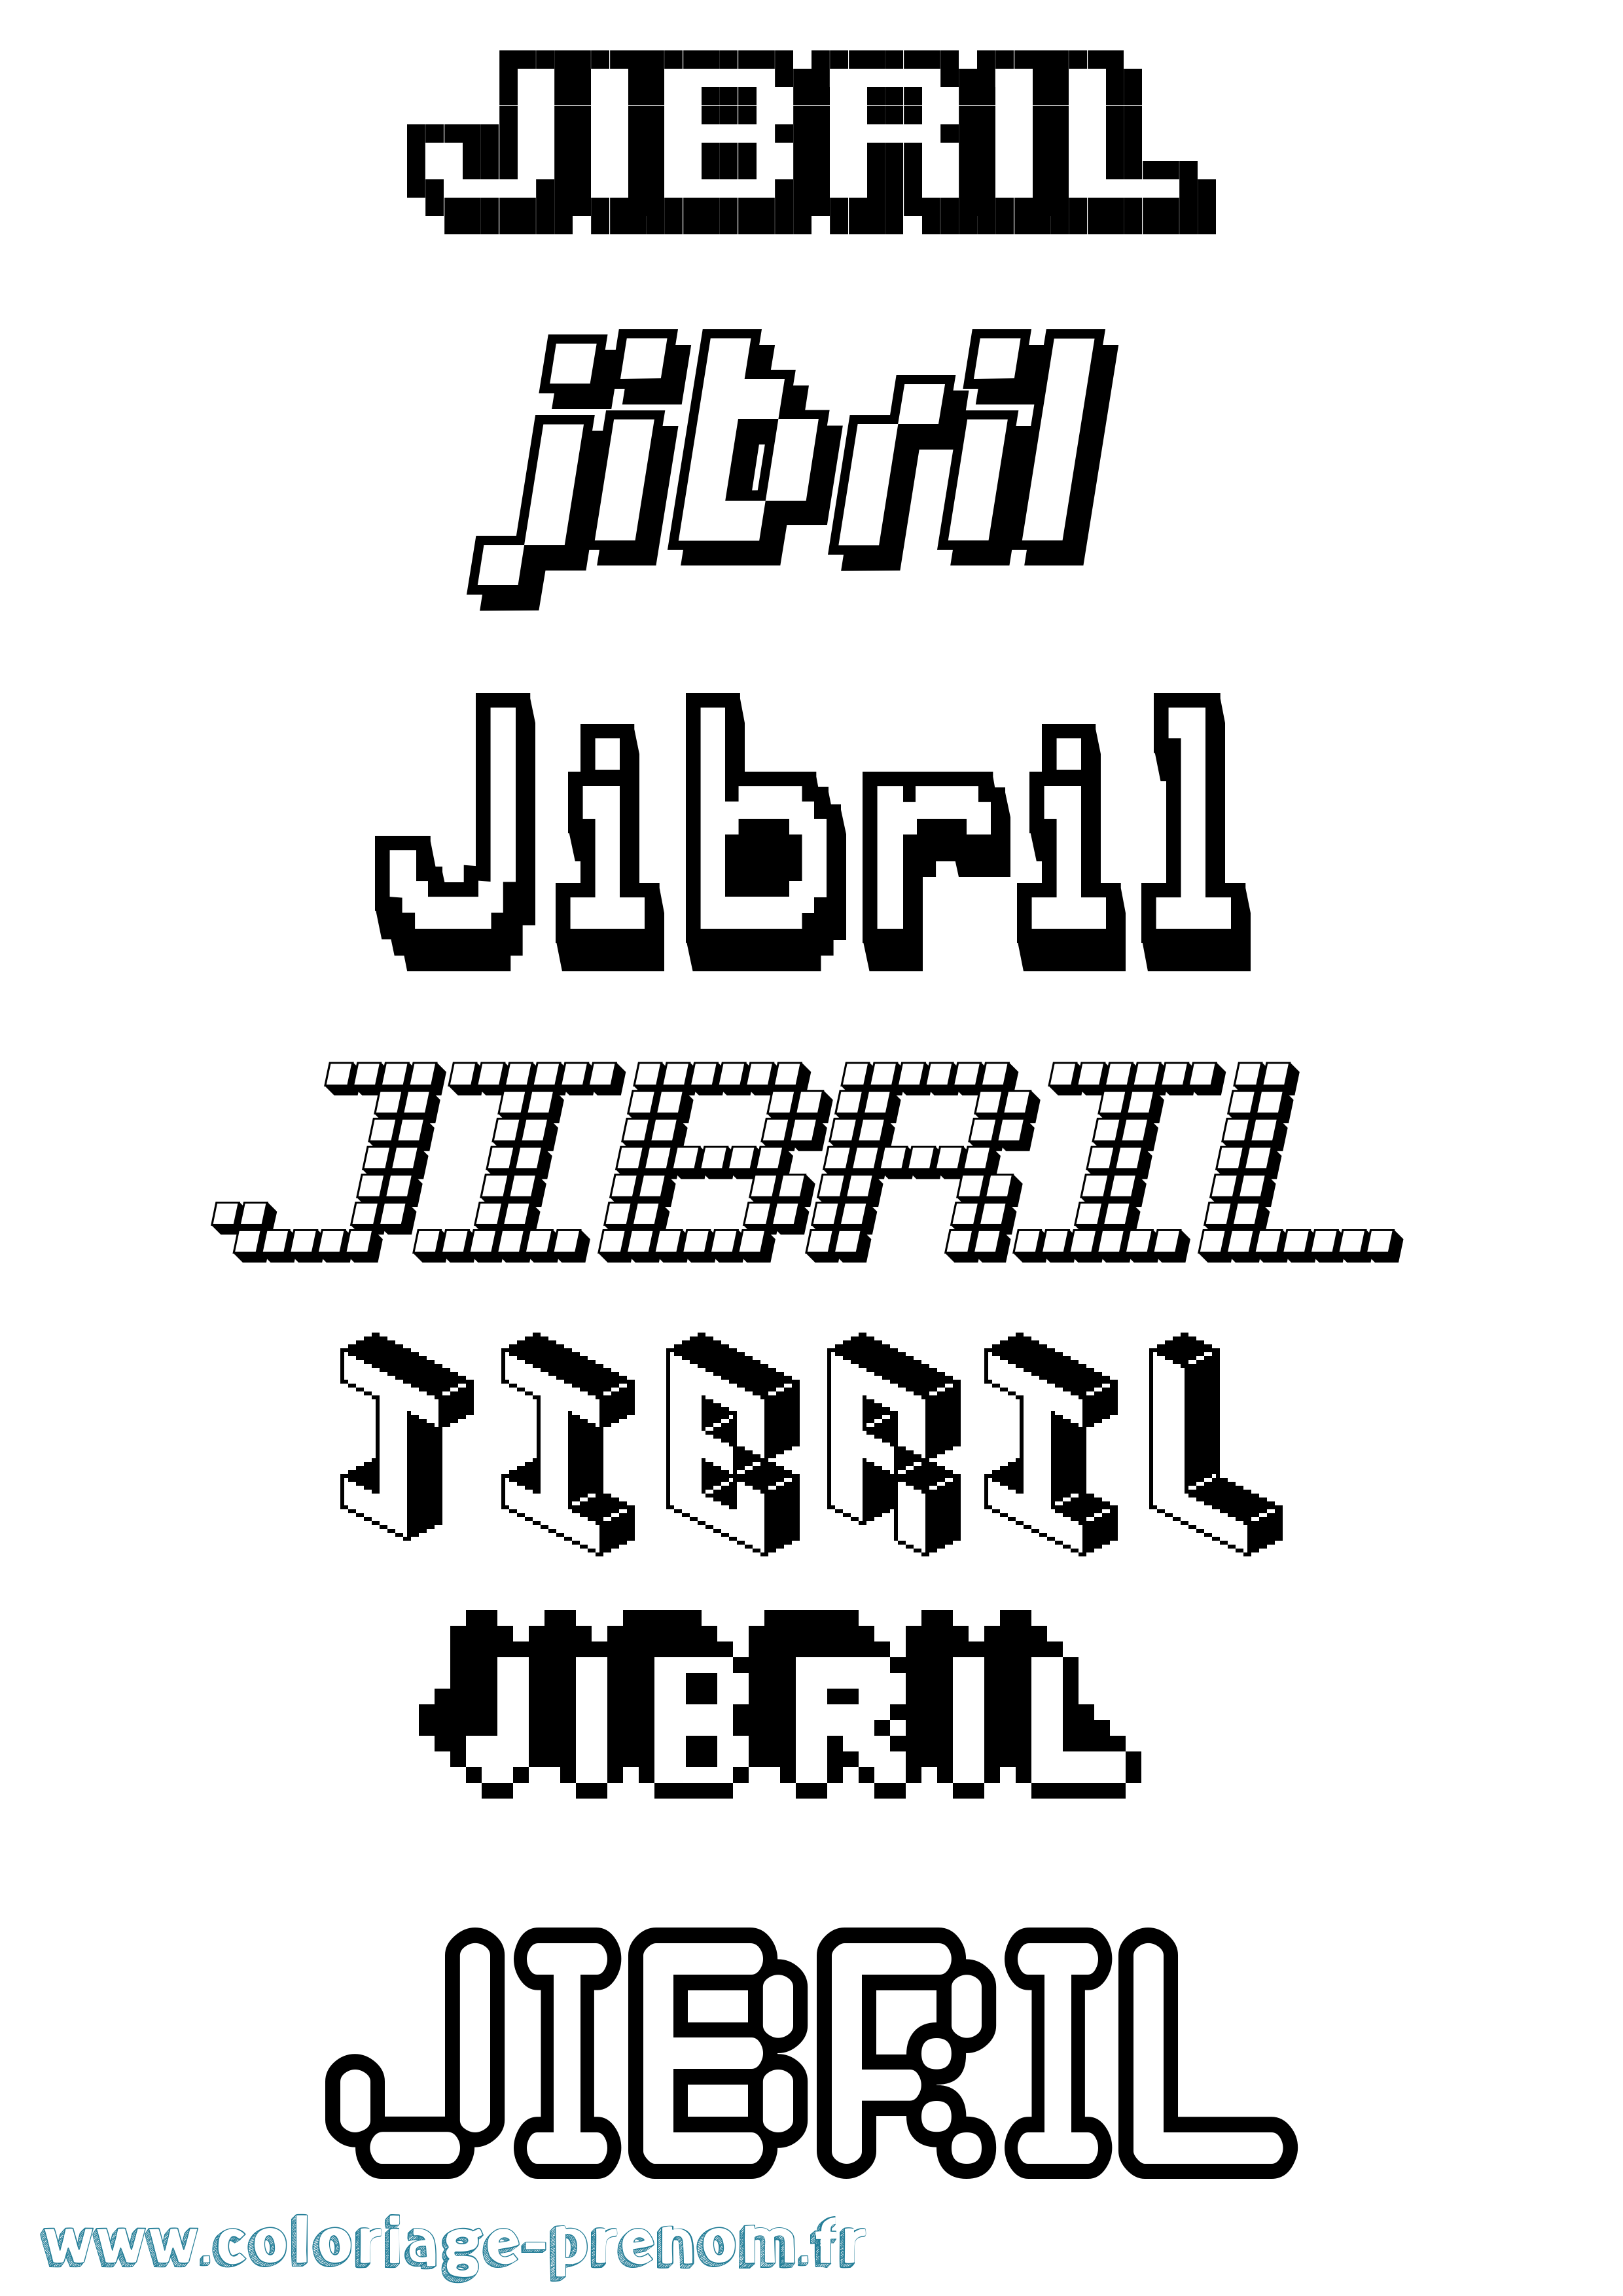 Coloriage prénom Jibril Pixel